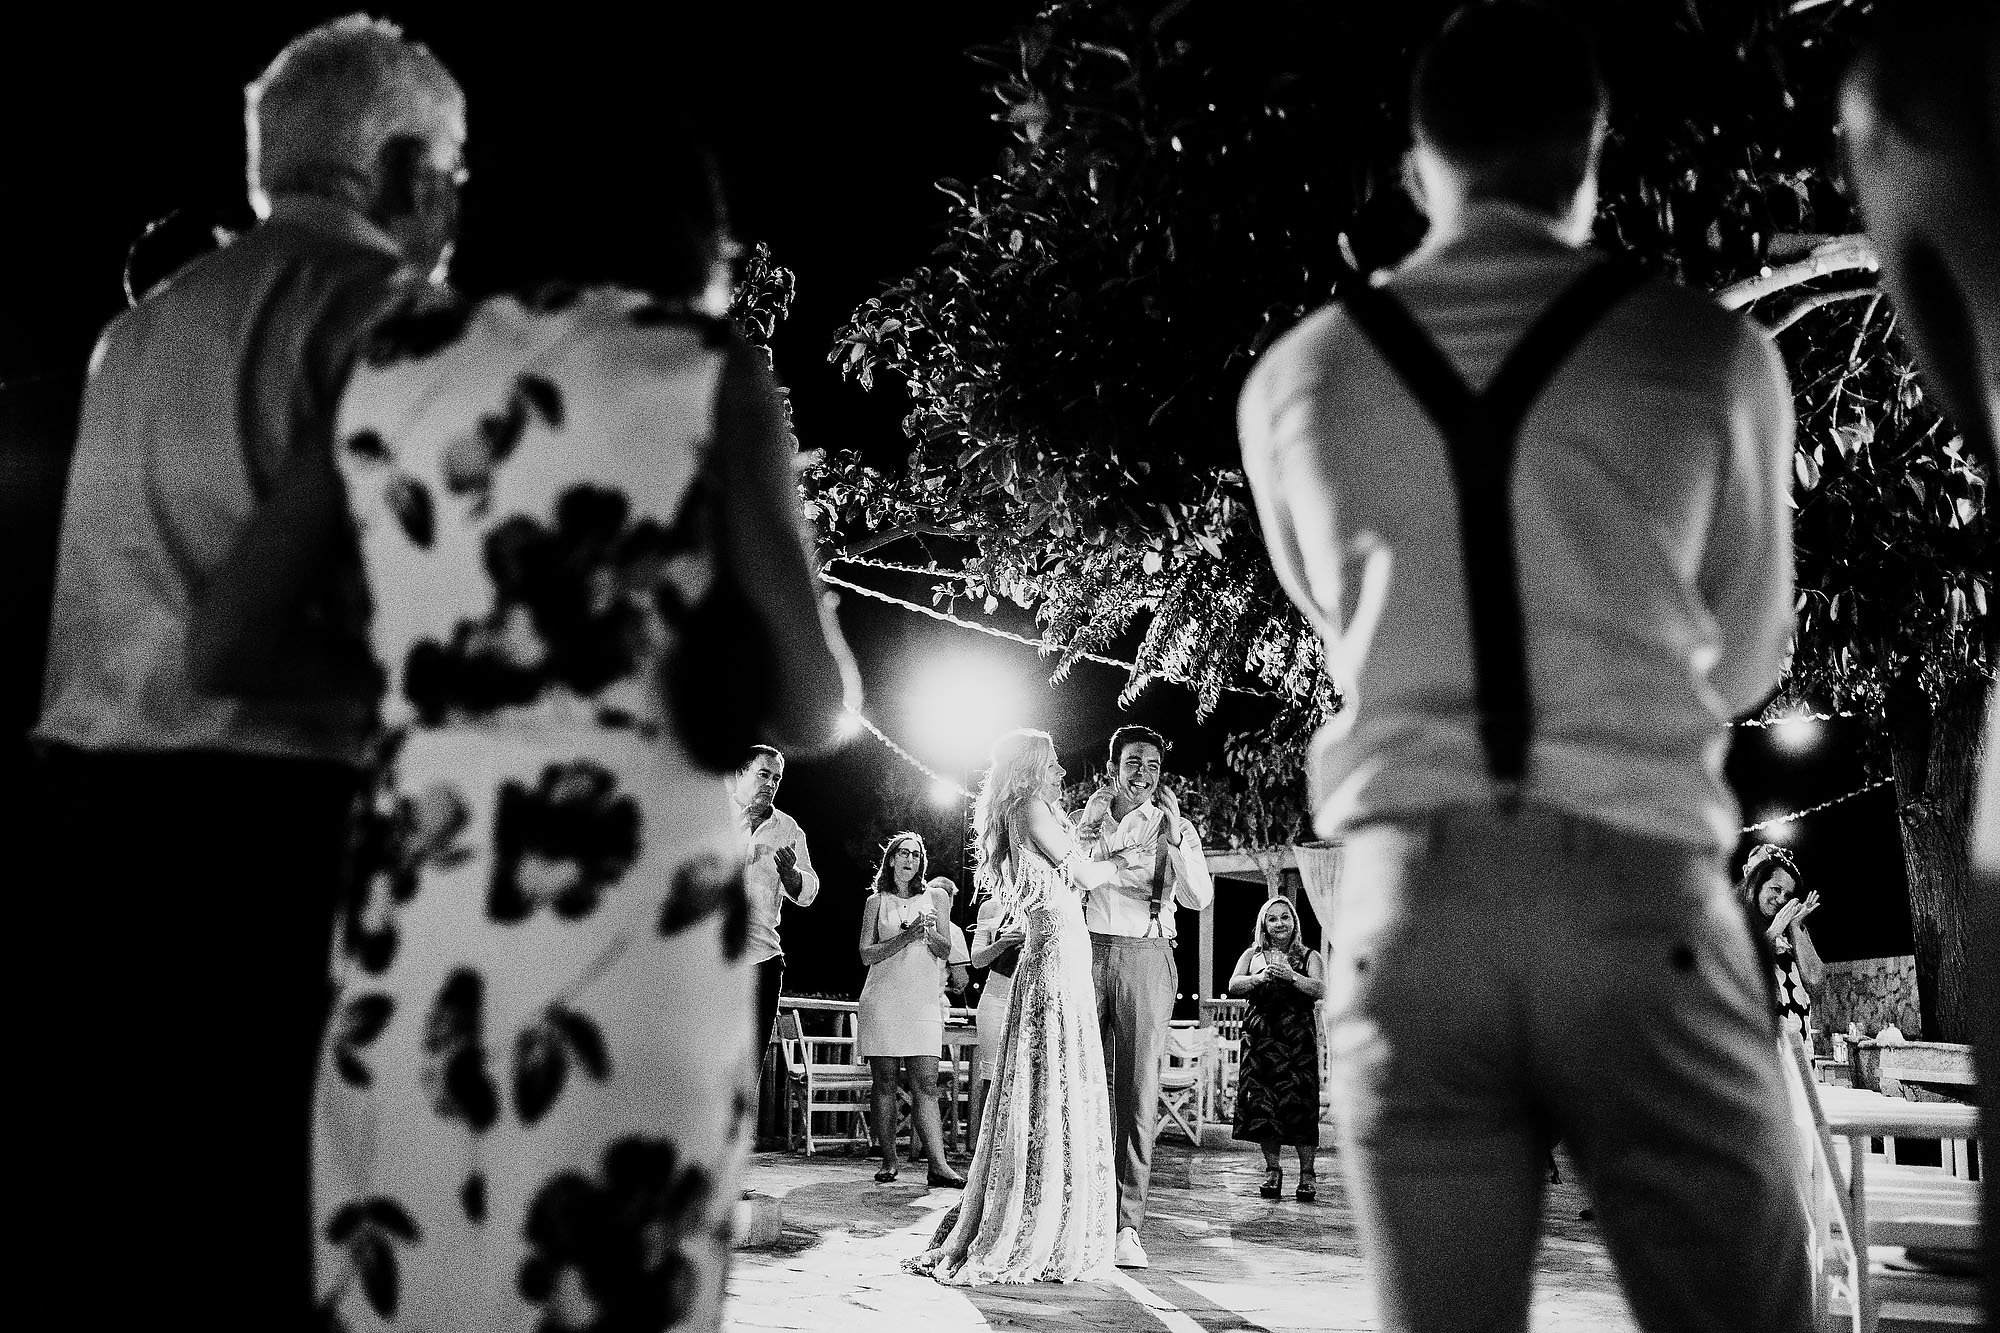 Pefkos rhodes greece destination wedding at philosophia - arj photography®